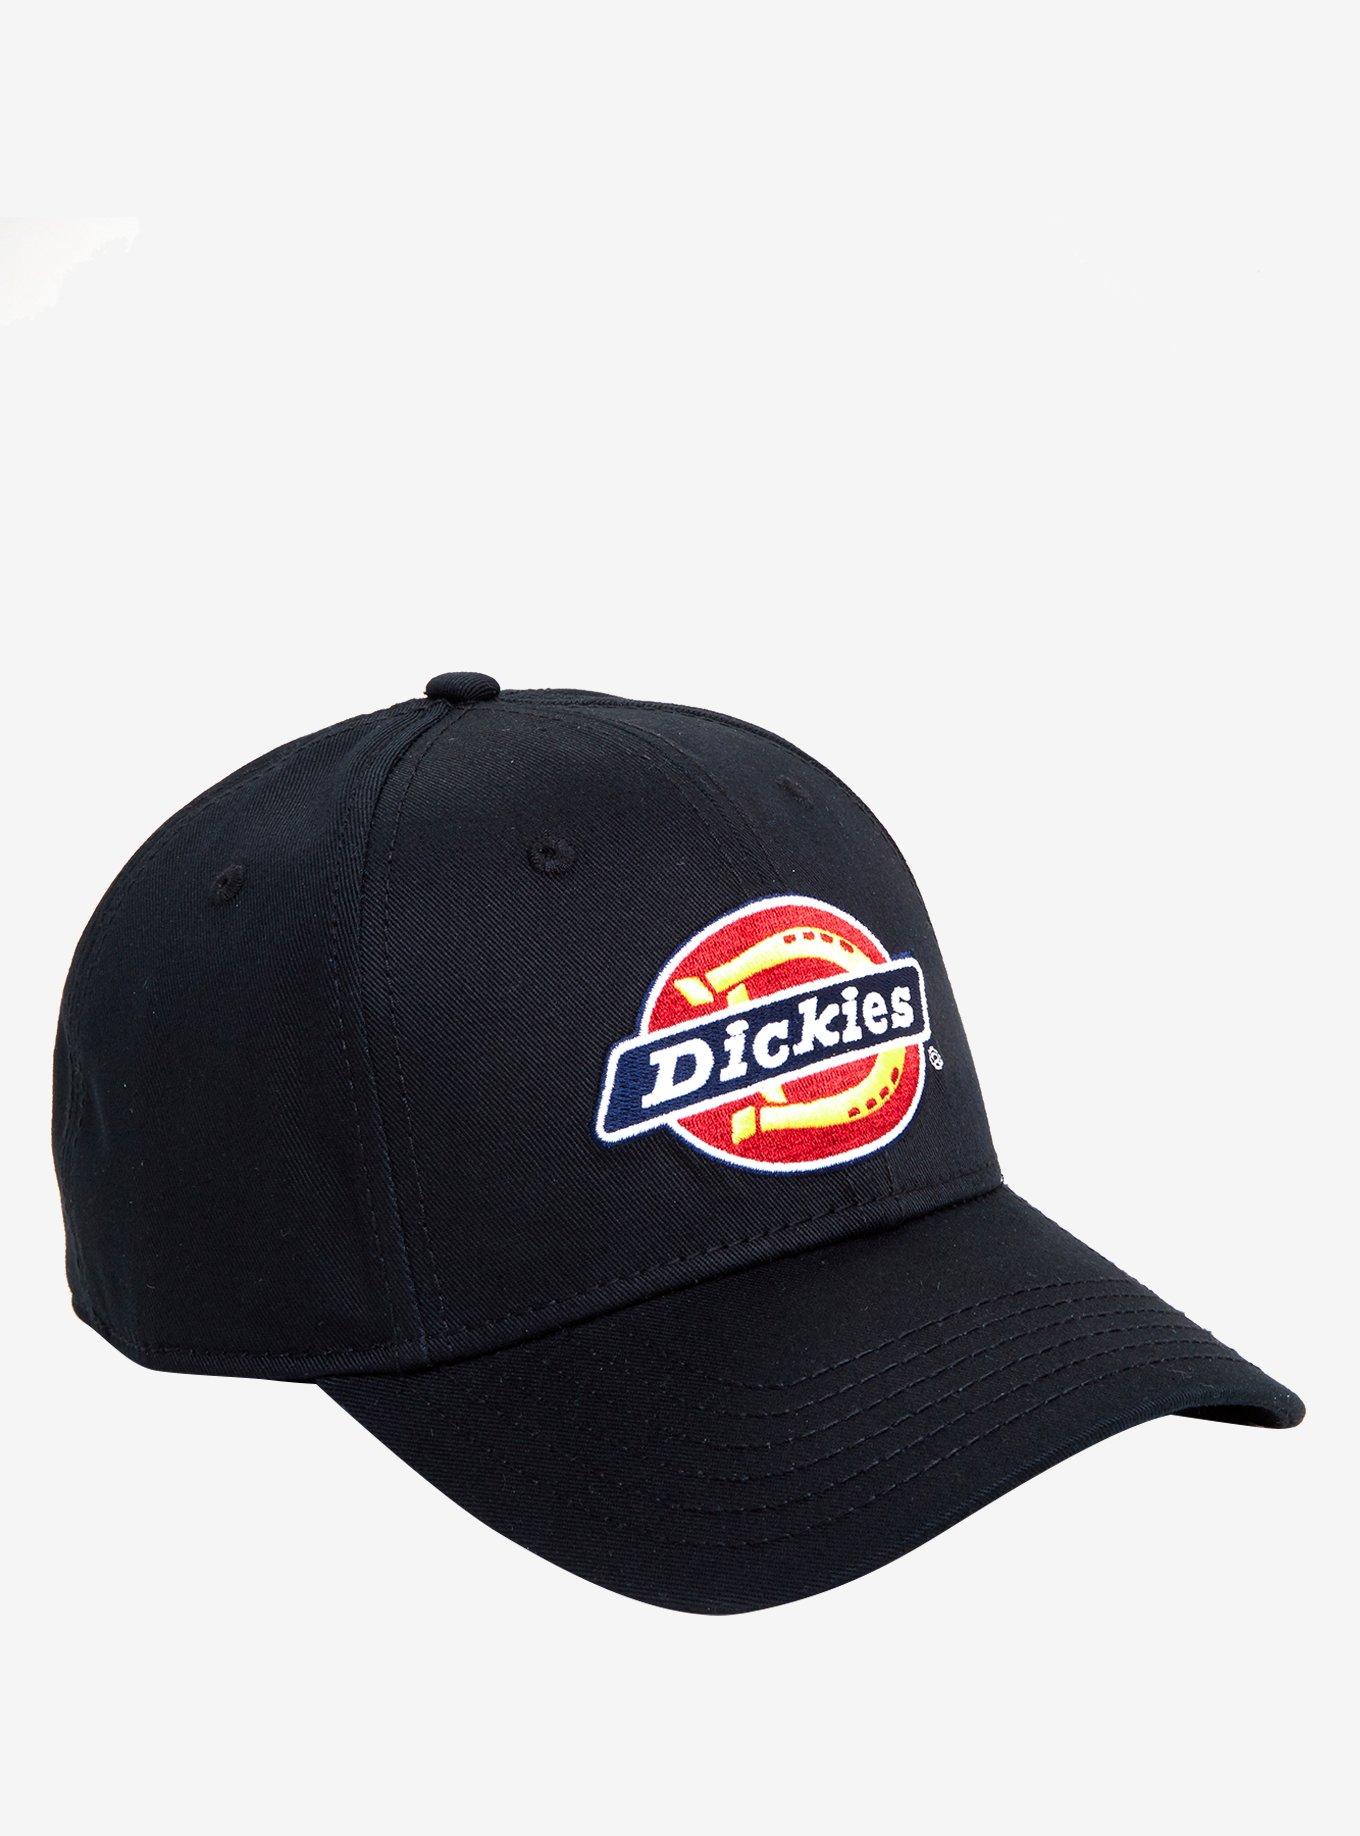 Dickies Black Hat, , hi-res